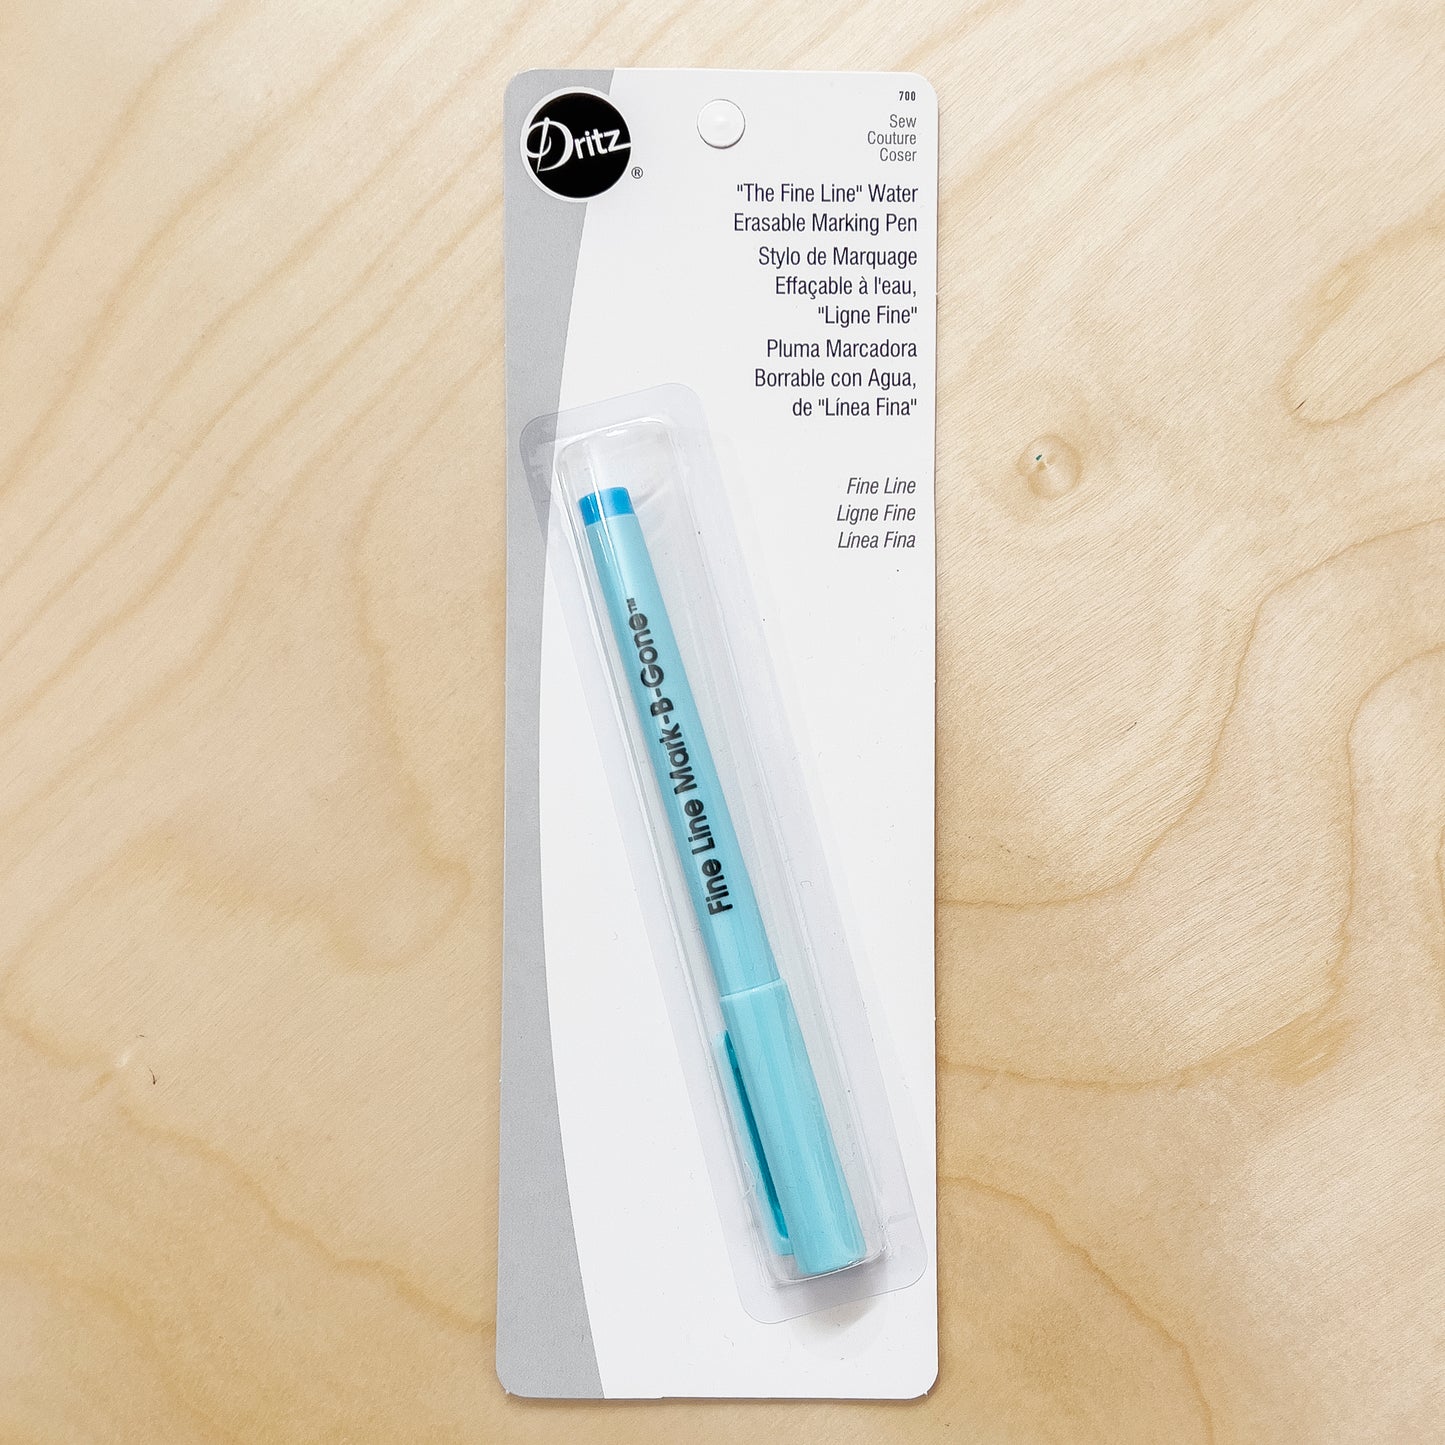 "The Fine Line" Water Erasable Marking Pen